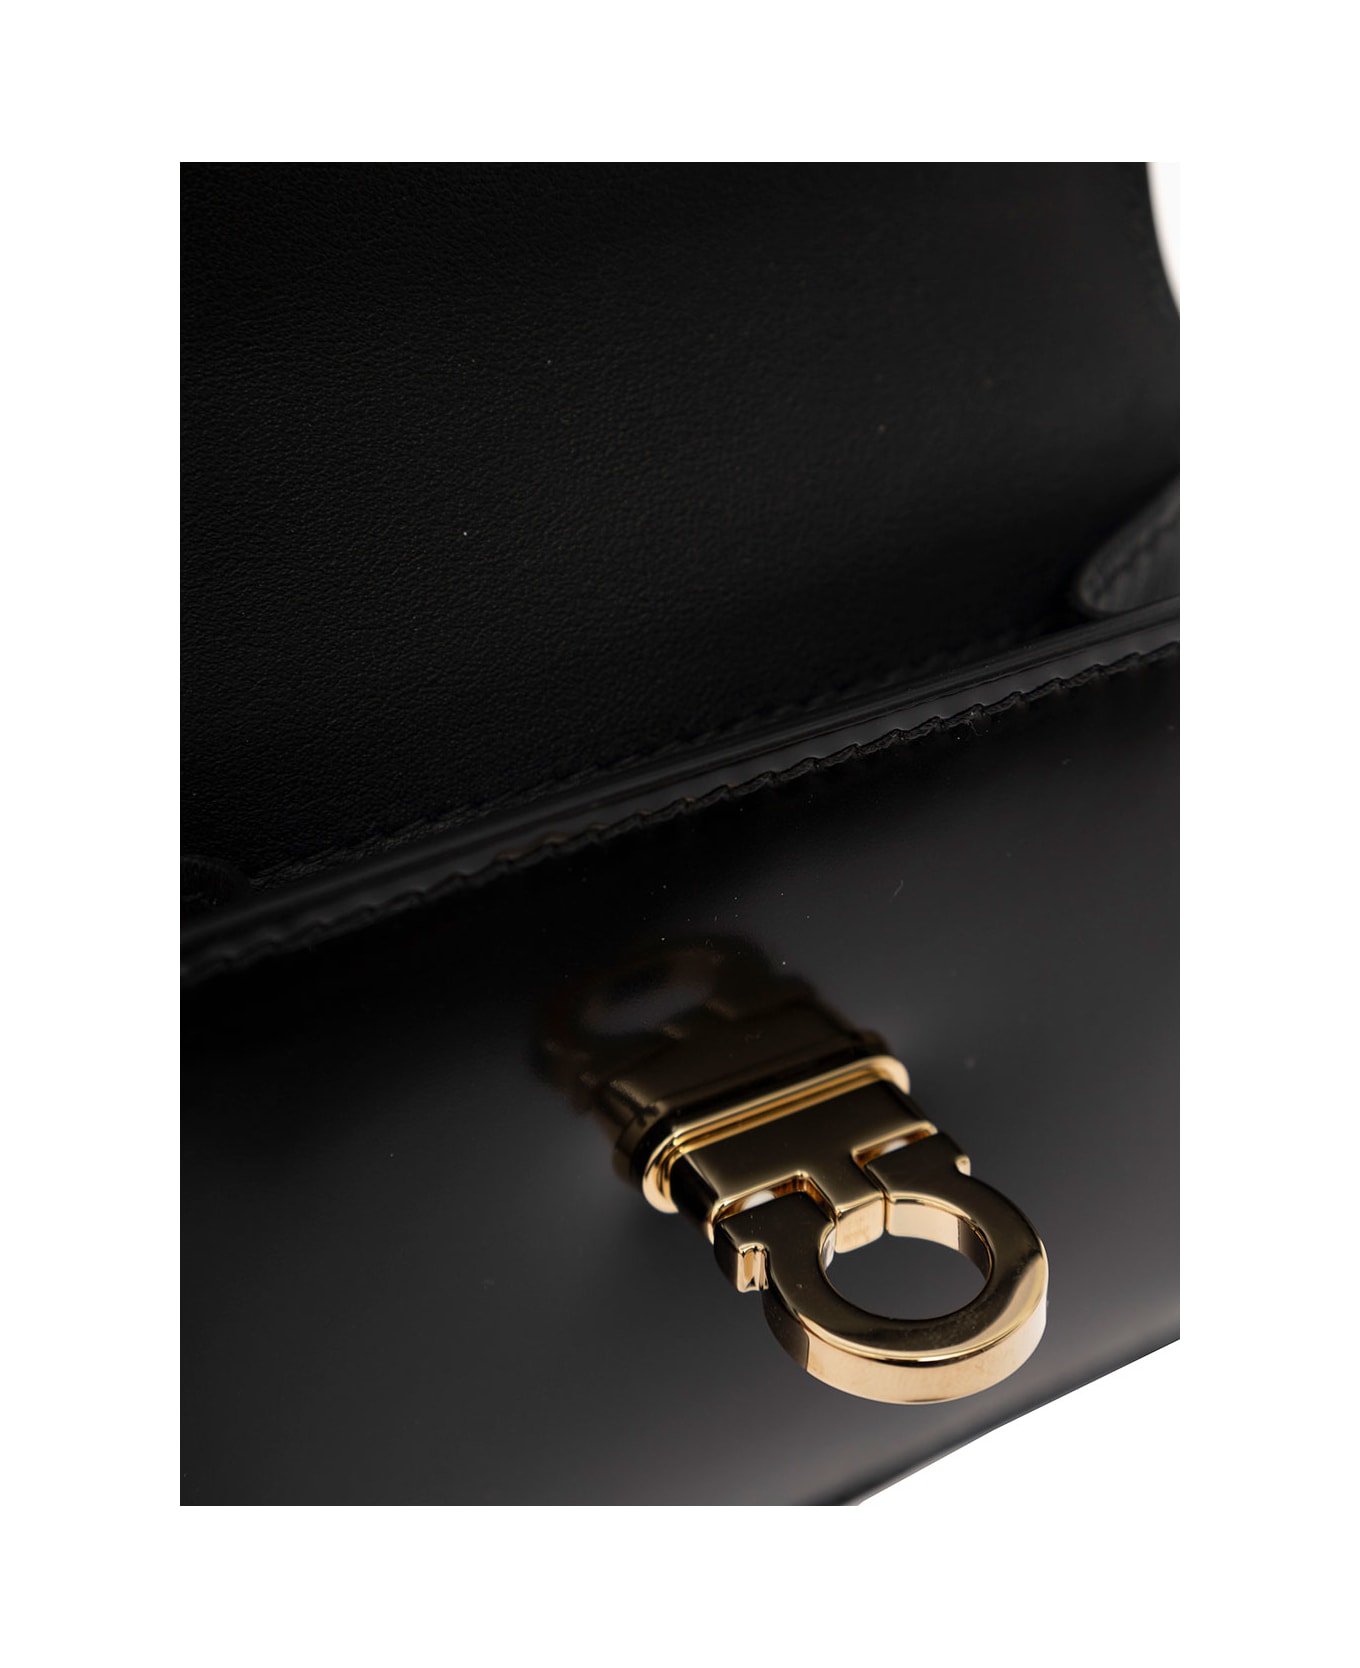 Ferragamo 'wanda' Black Wallet With Gancini Closure In Patent Leather Woman - Black アクセサリー